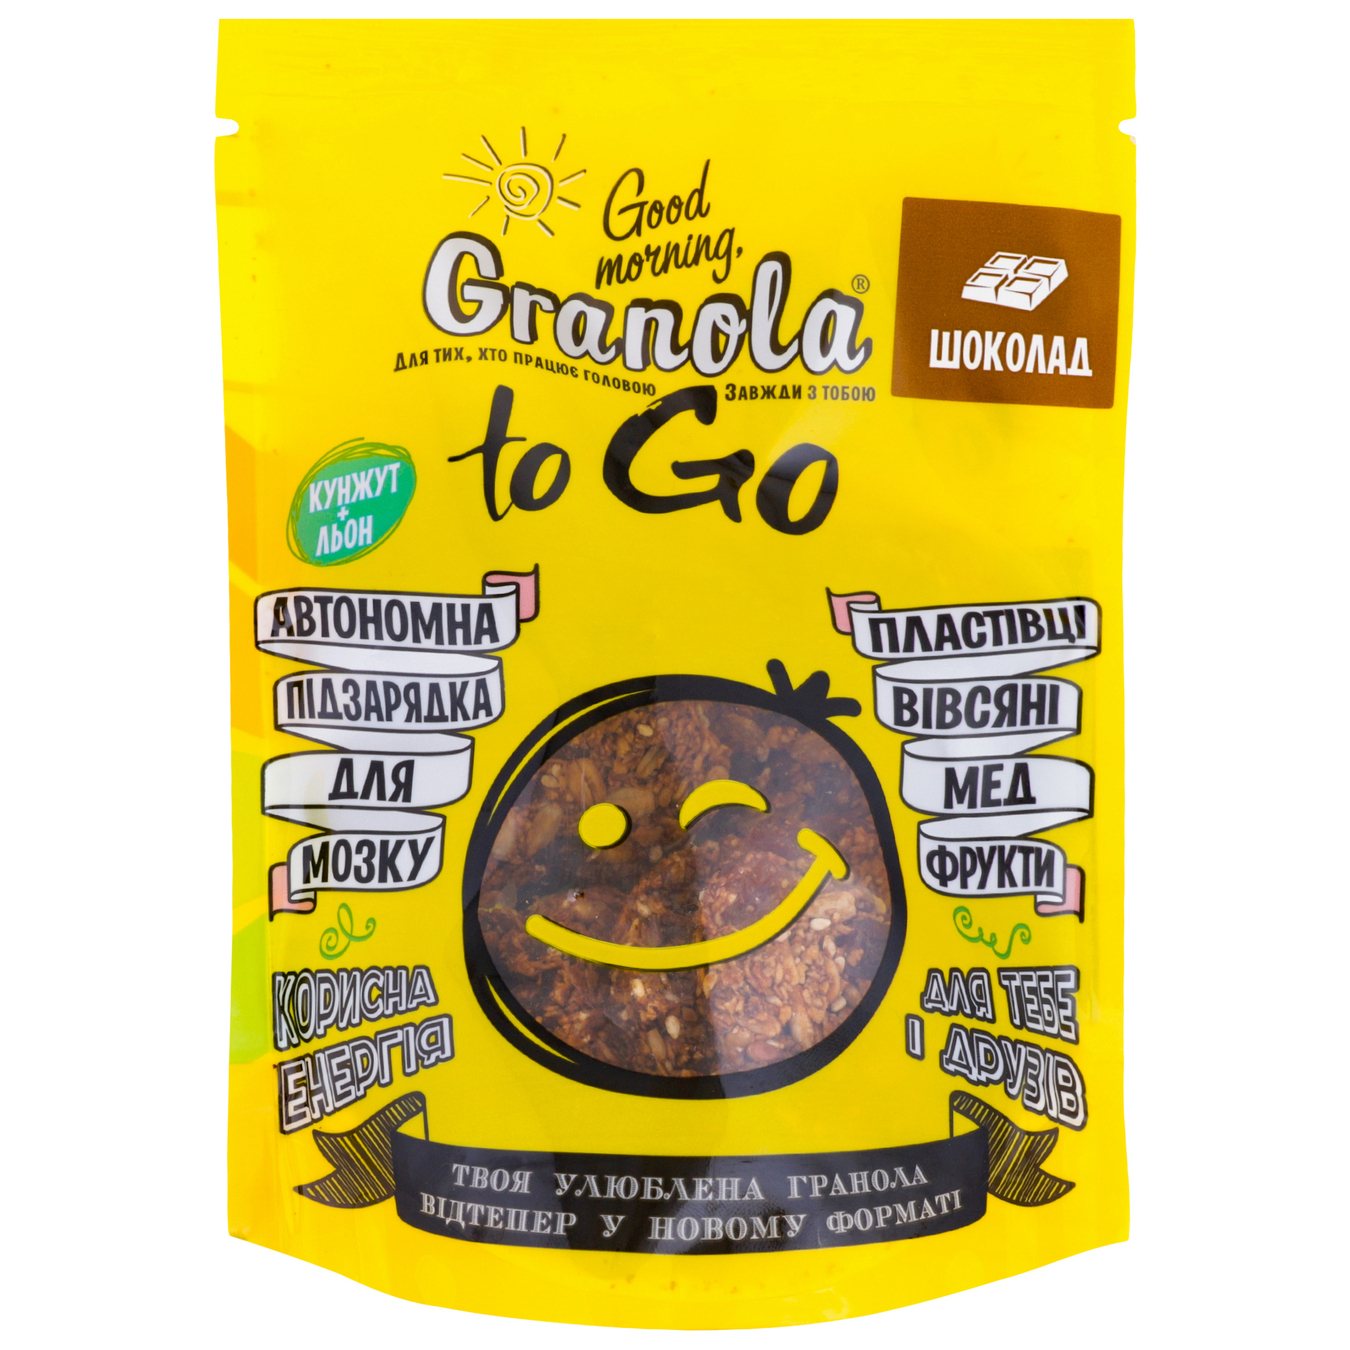 Good Morning granola with chocolate 140g